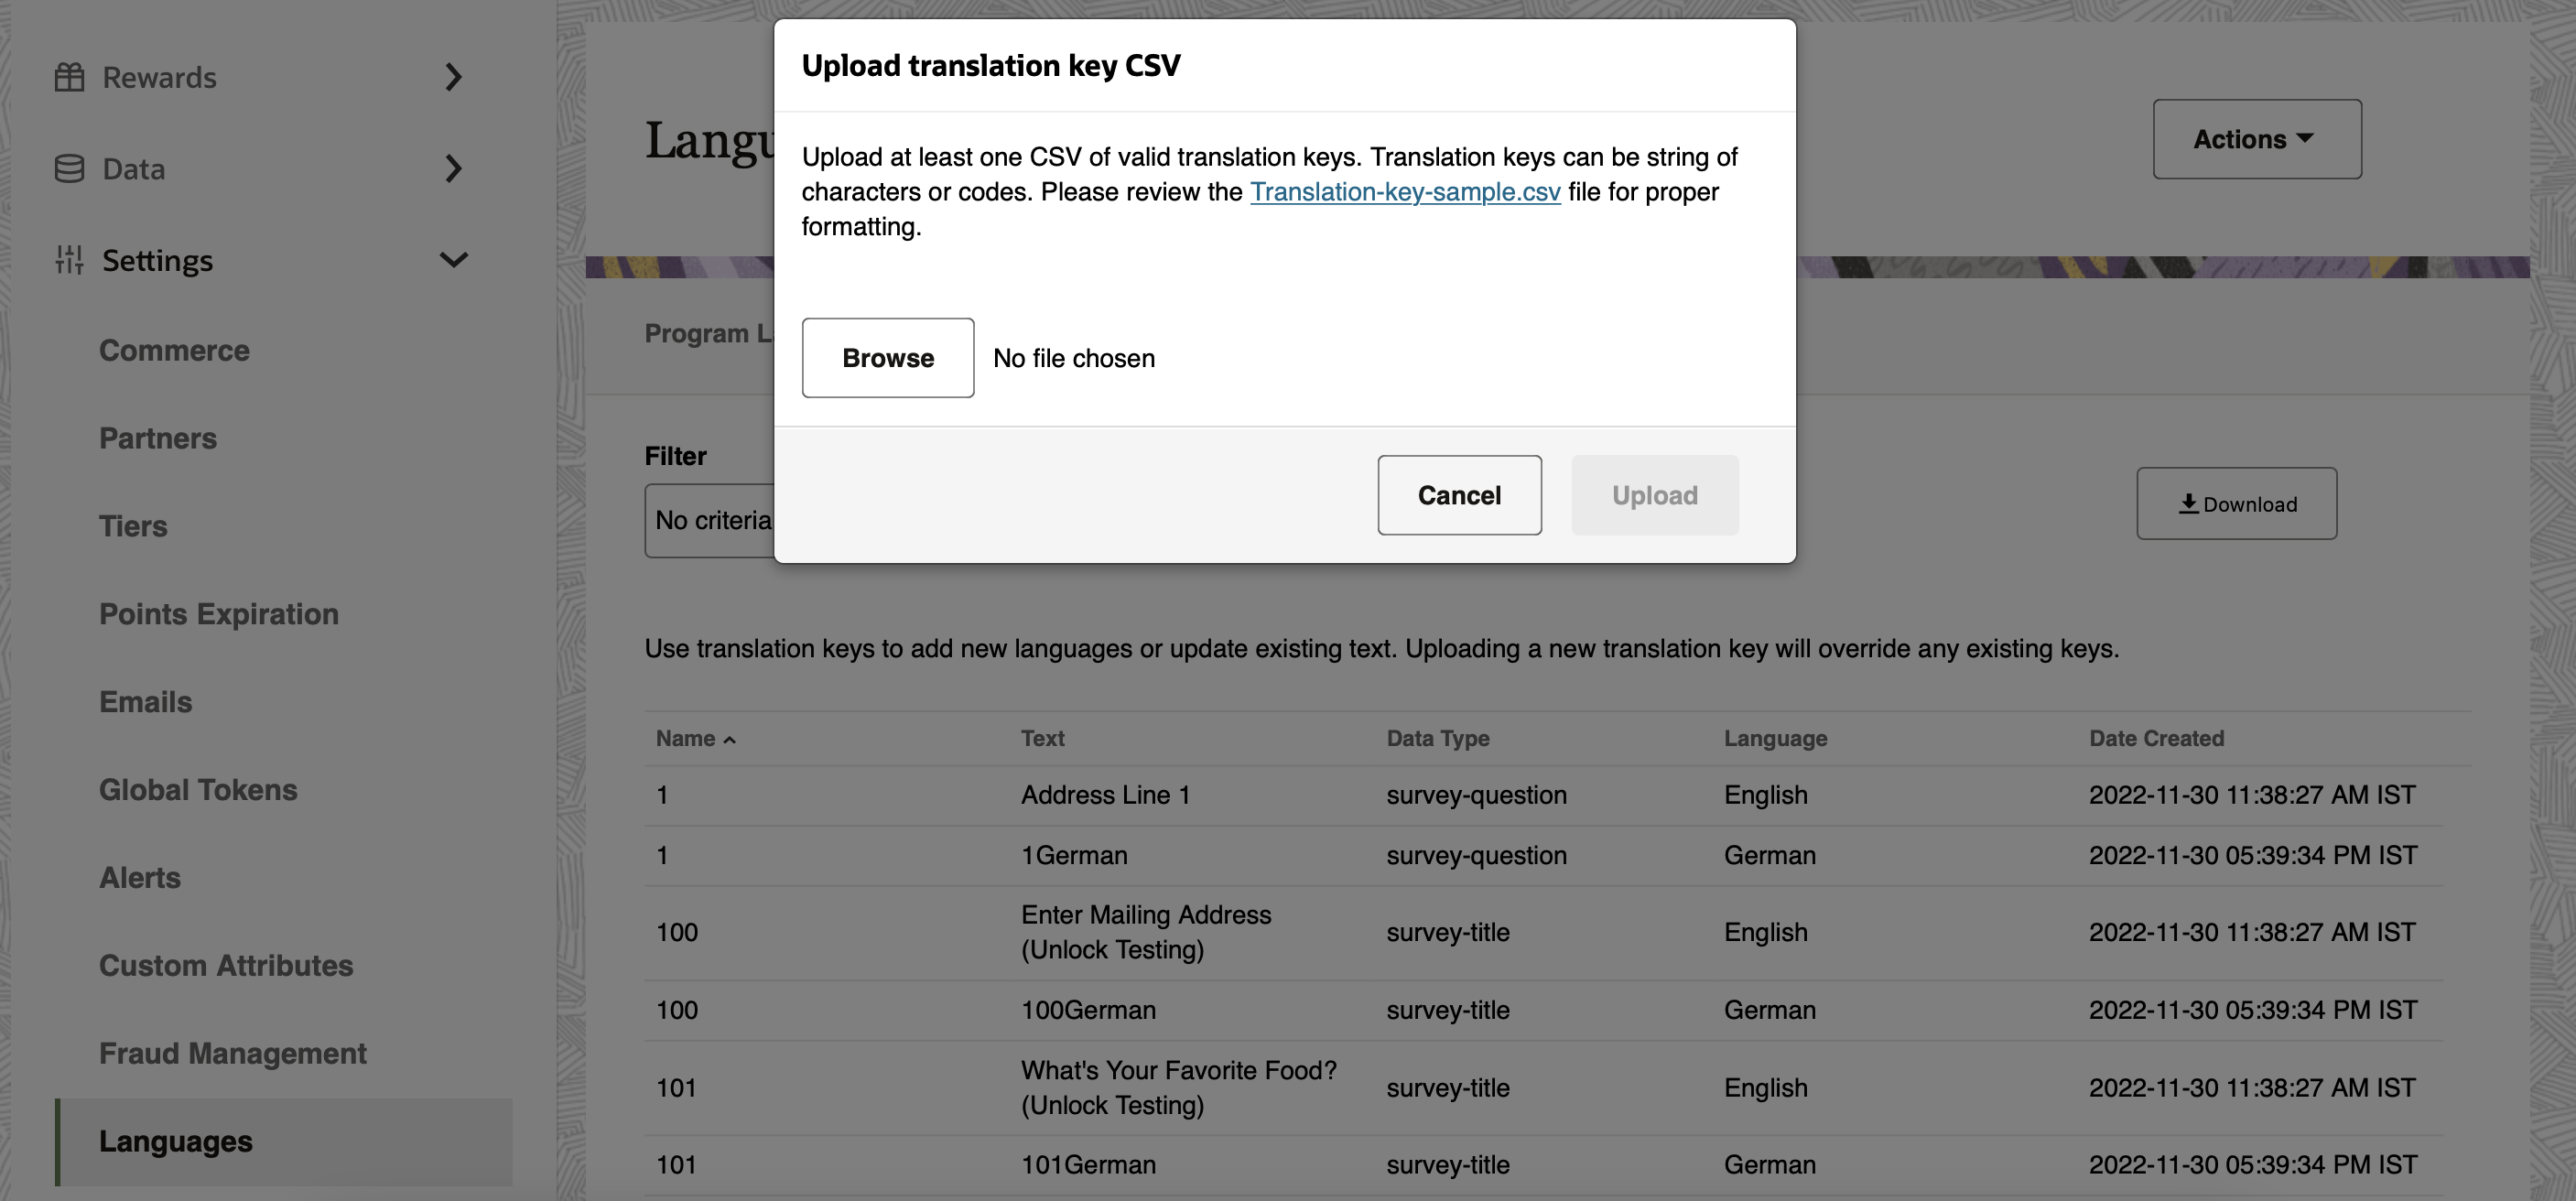 This image shows the Upload translation key CSV window.